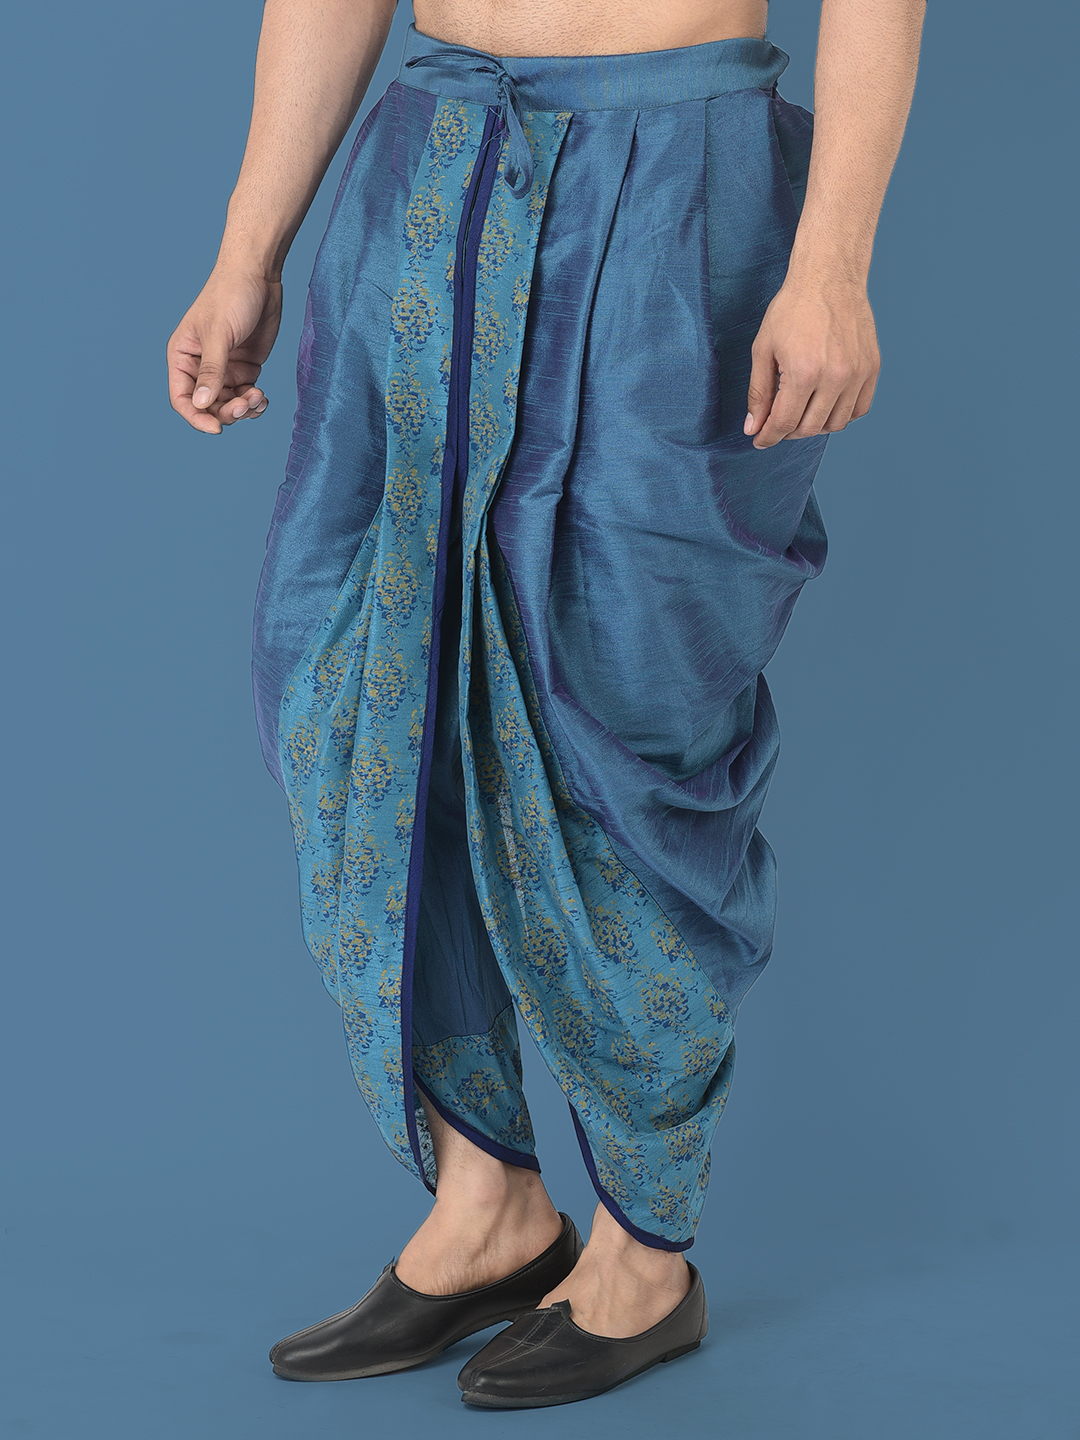 Buy global desi Womens Printed Dhoti Pants Navy at Amazon.in